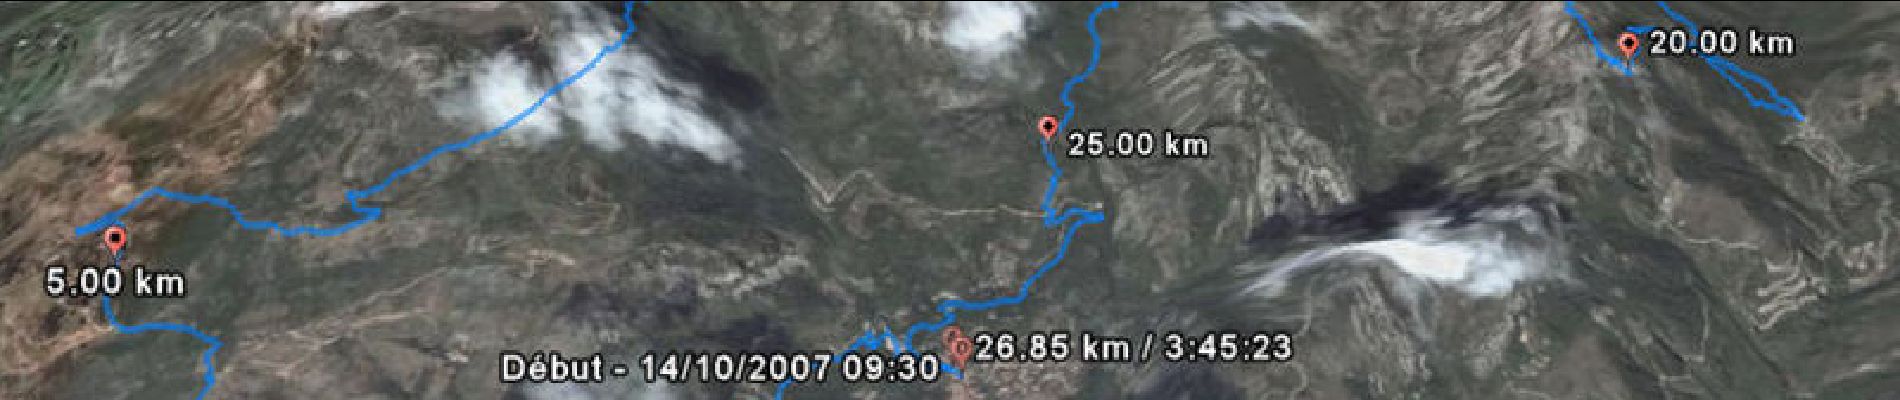 Tocht Lopen Gorbio - Trail de Gorbio 32km 2007 - Photo